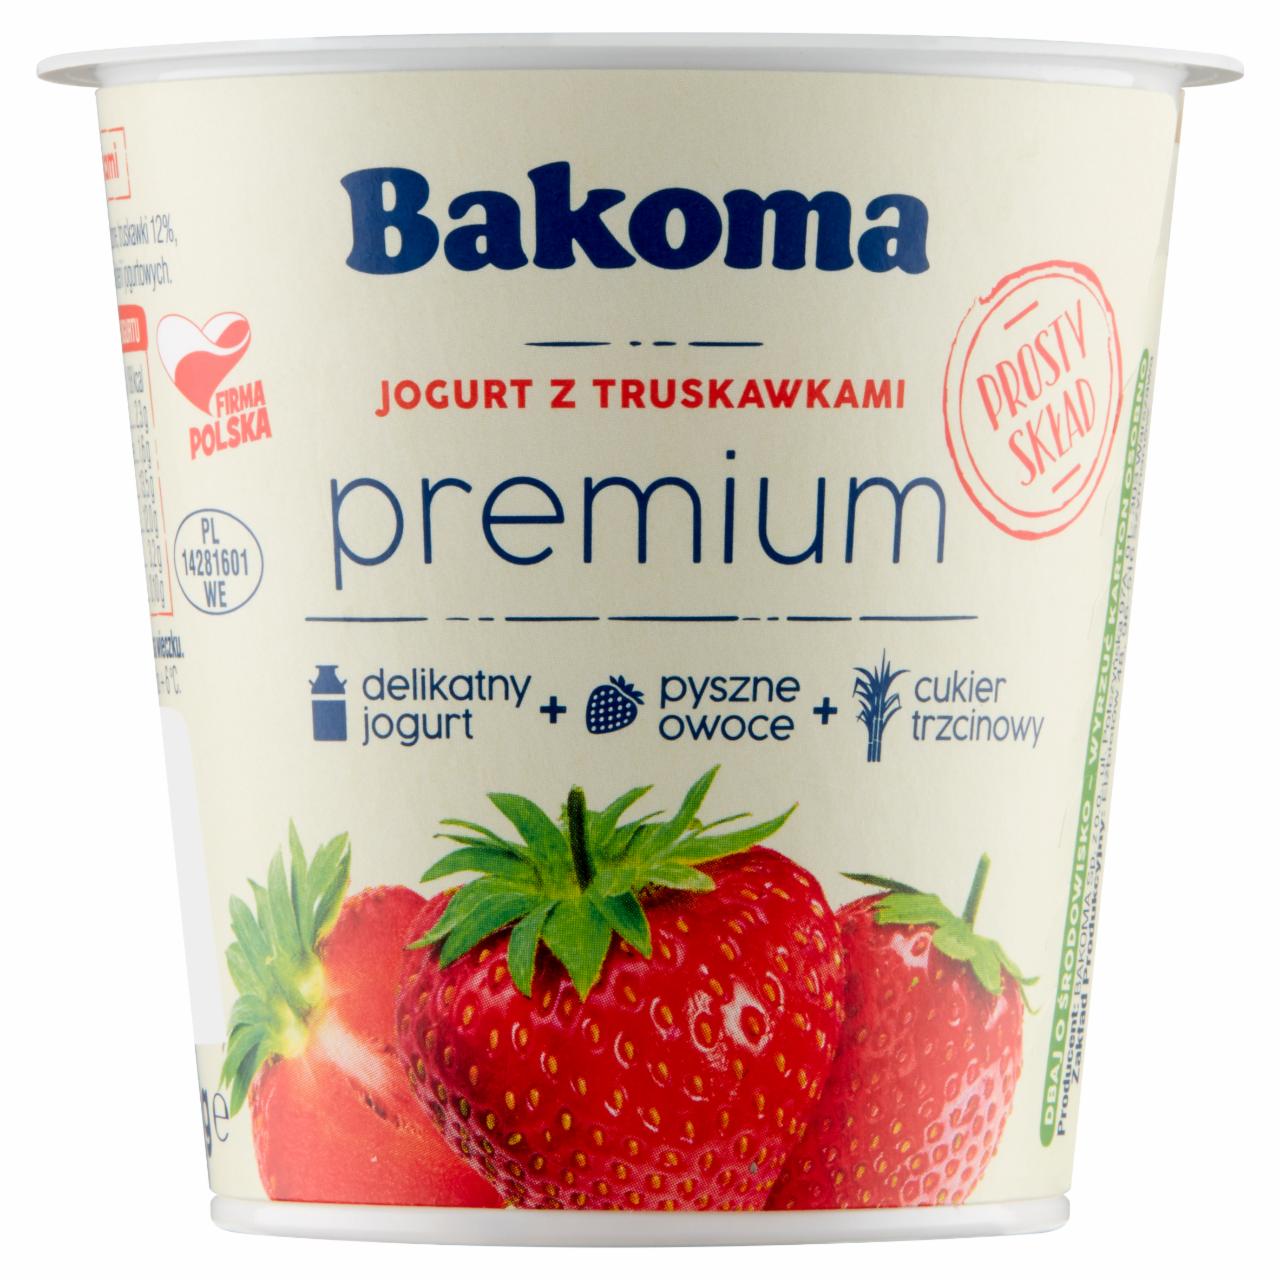 Zdjęcia - Bakoma Premium Jogurt z truskawkami 140 g